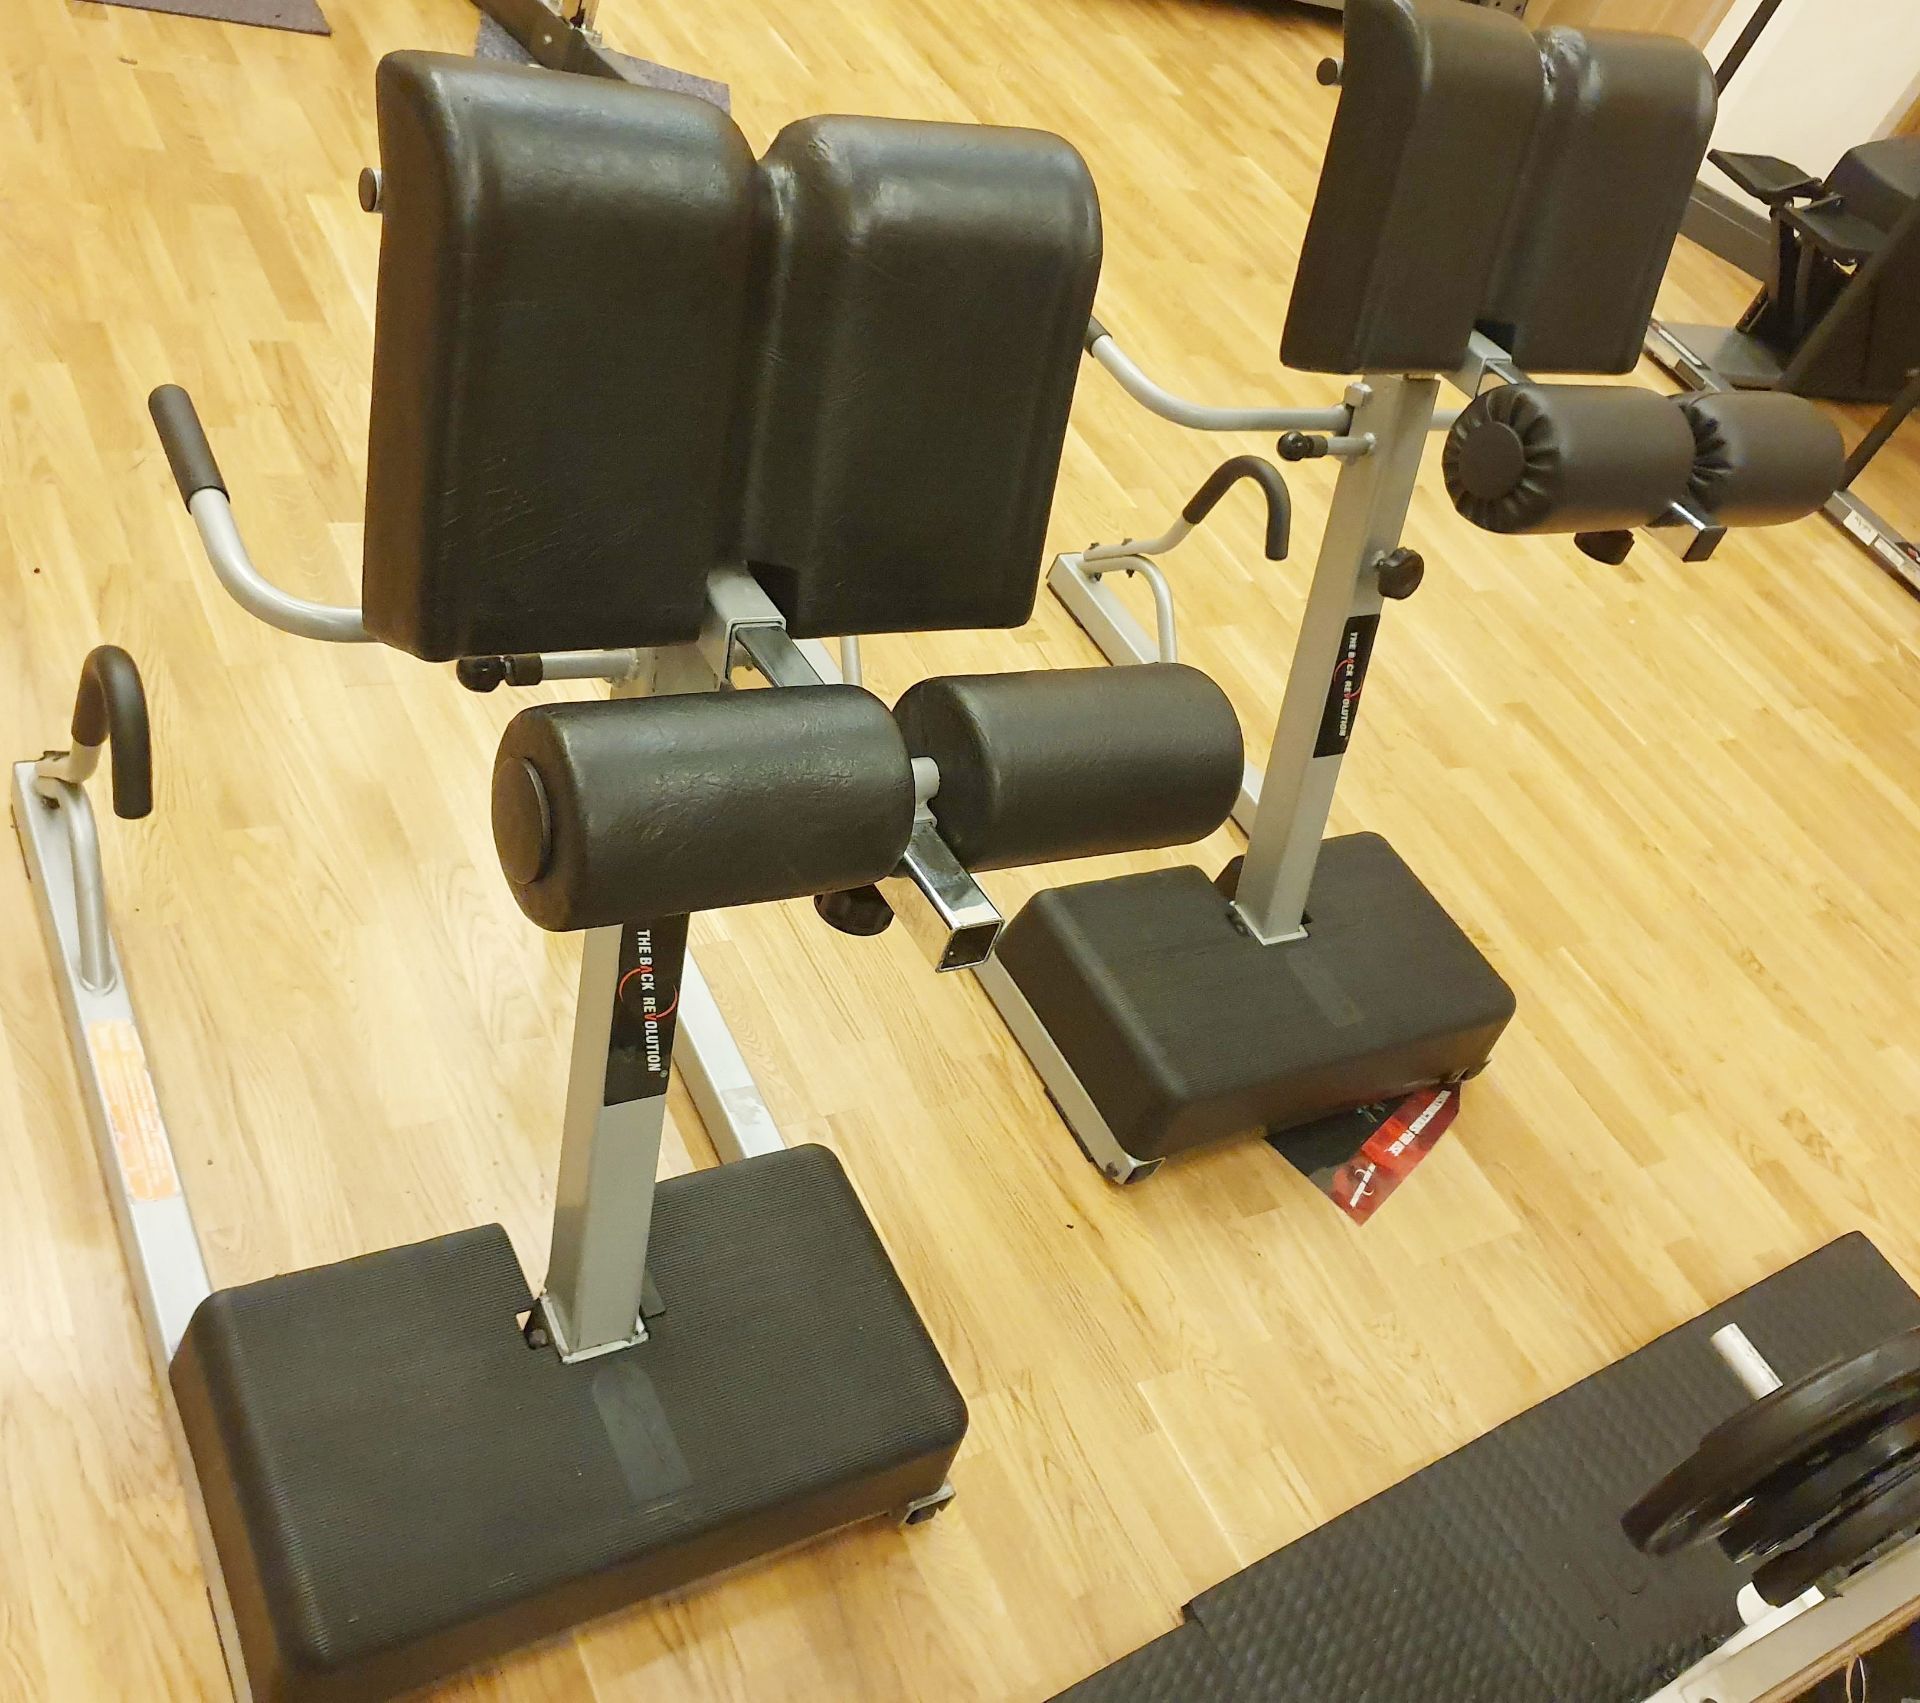 1 x Back Revolution Exercise Stretching Gym Machine - CL552 - Location: Altrincham WA14